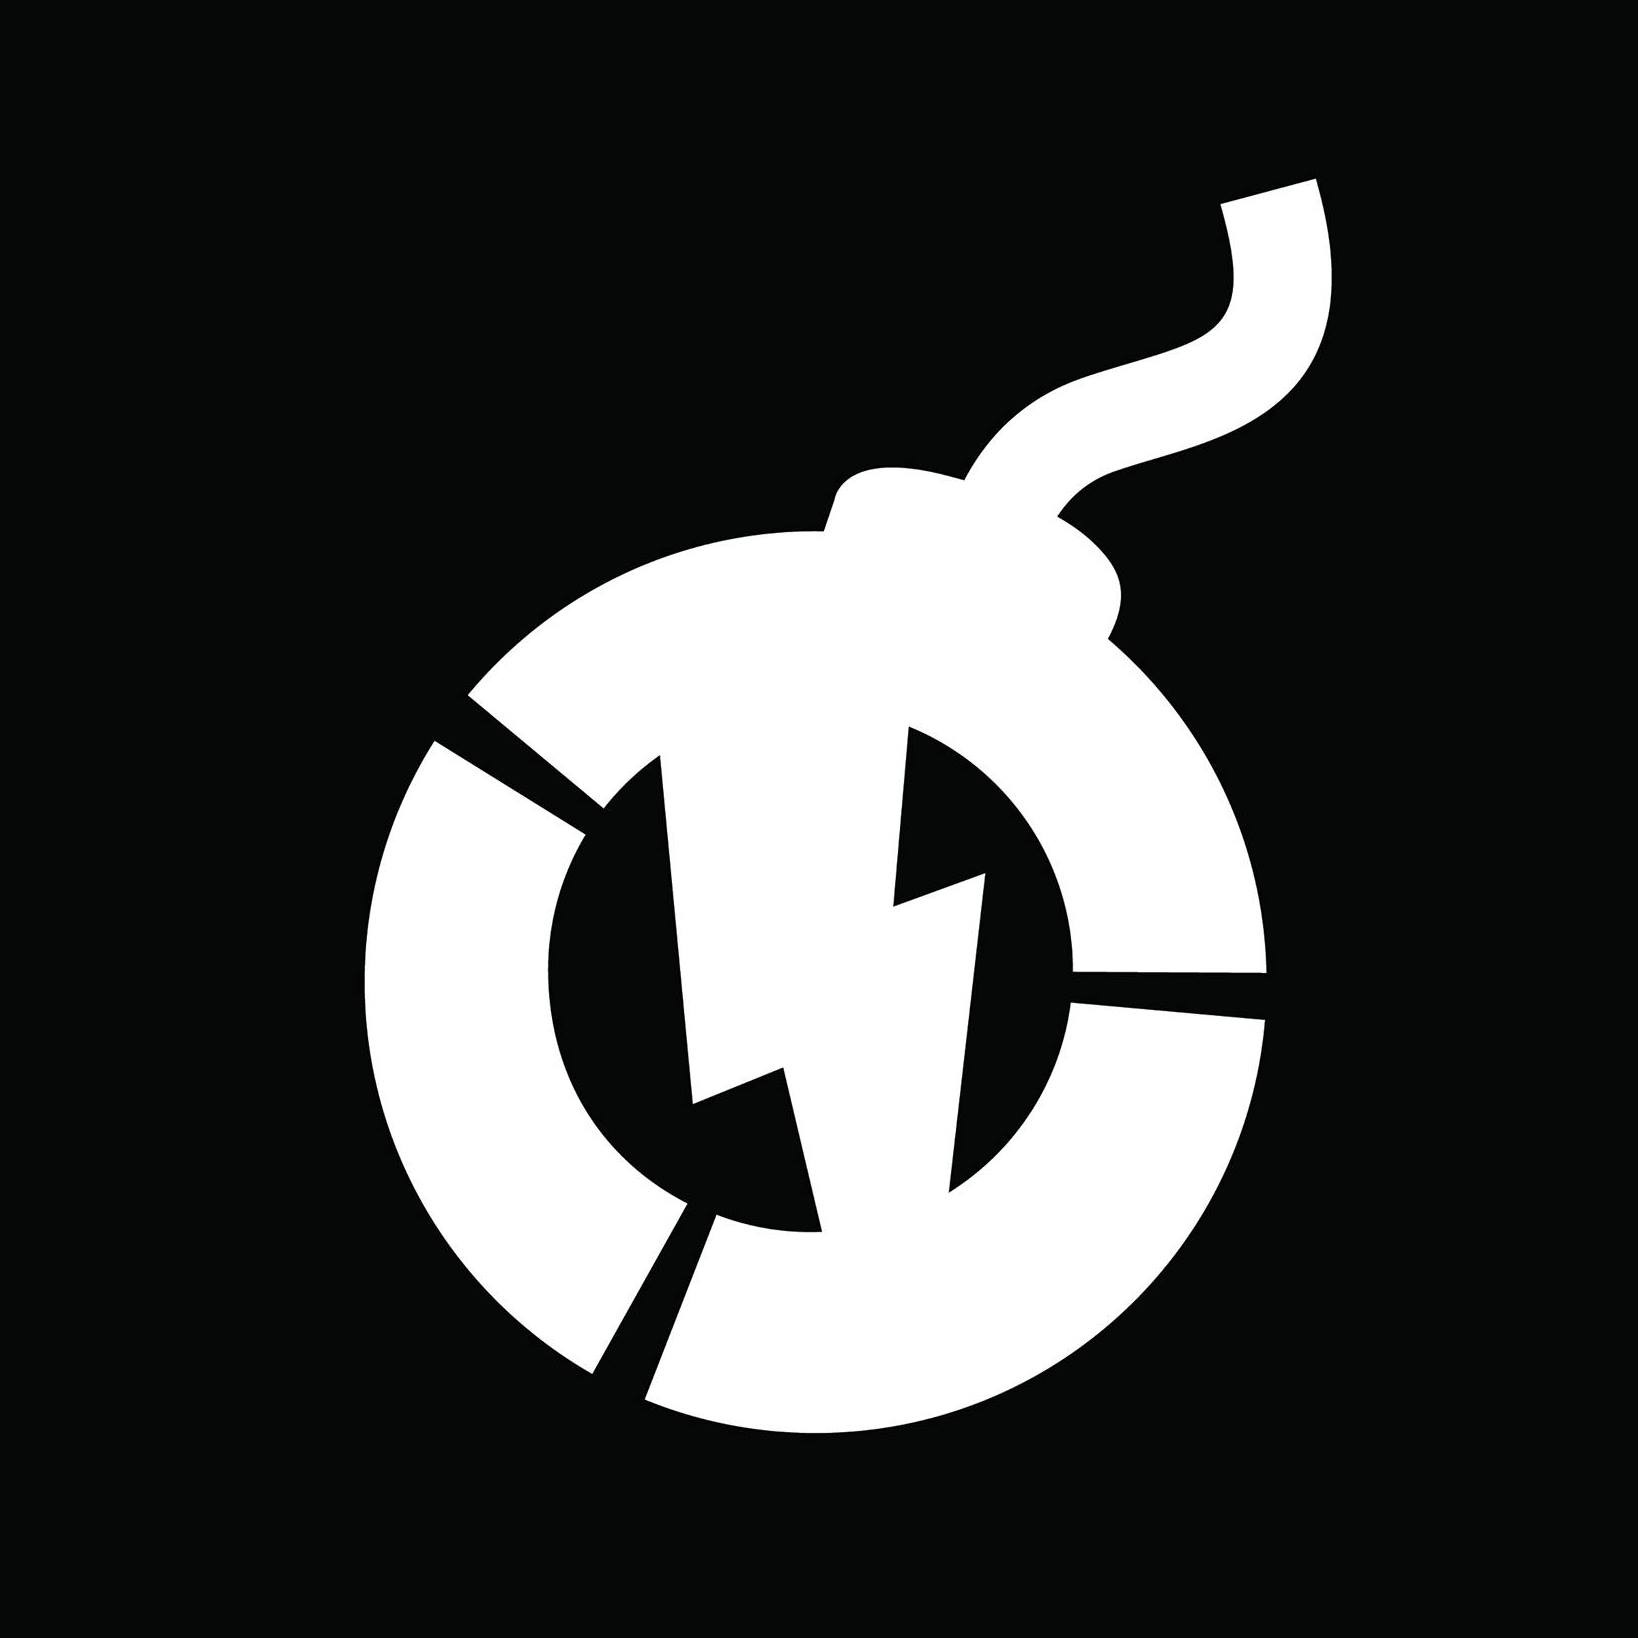 Company logo of Nitro Circus